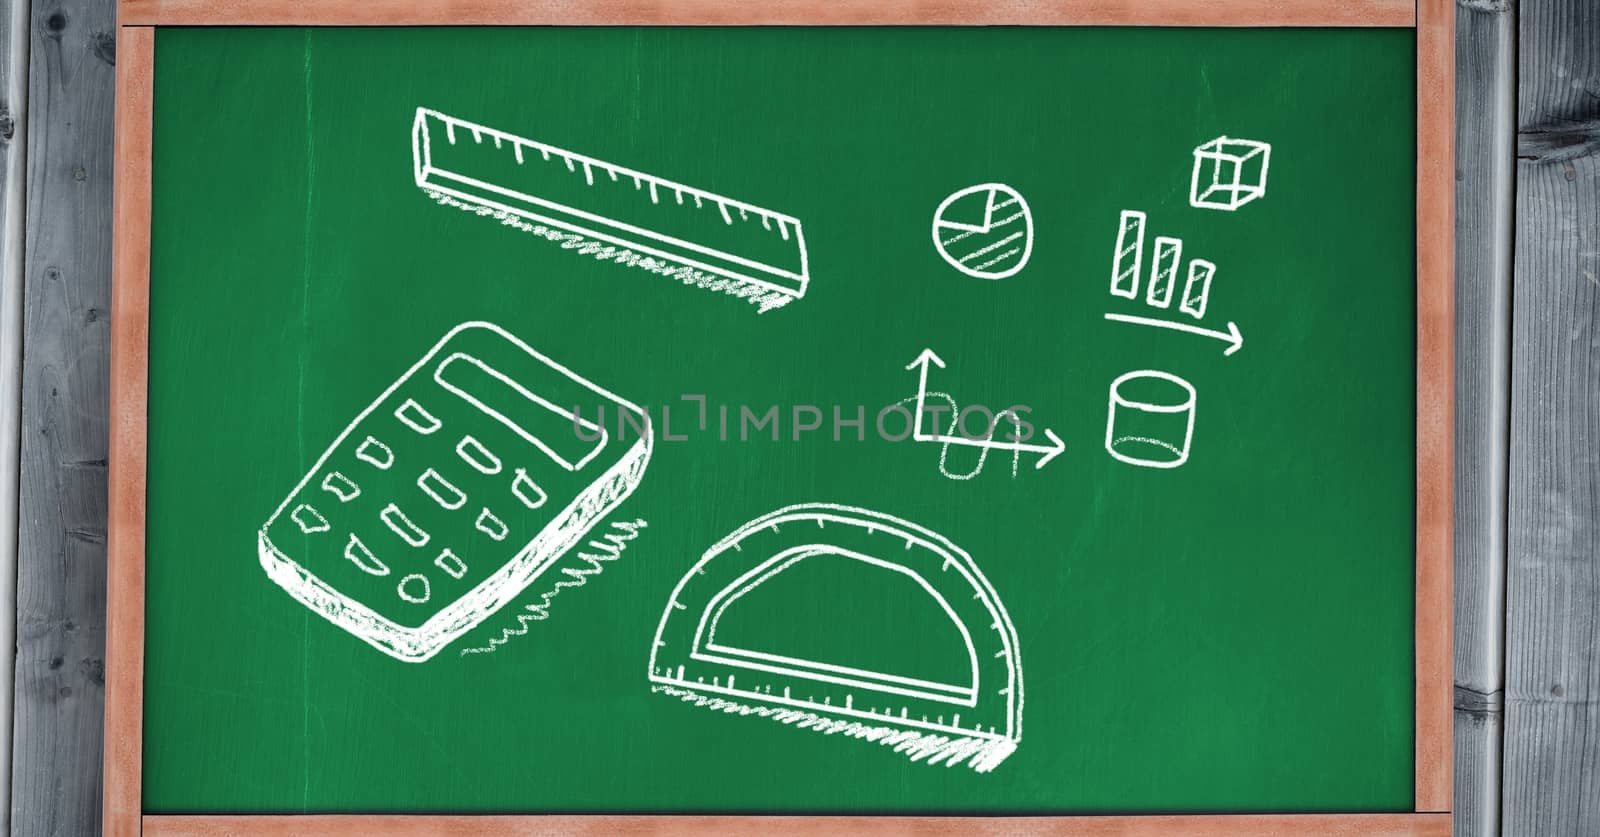 Geometry and math education drawings on blackboard for school by Wavebreakmedia